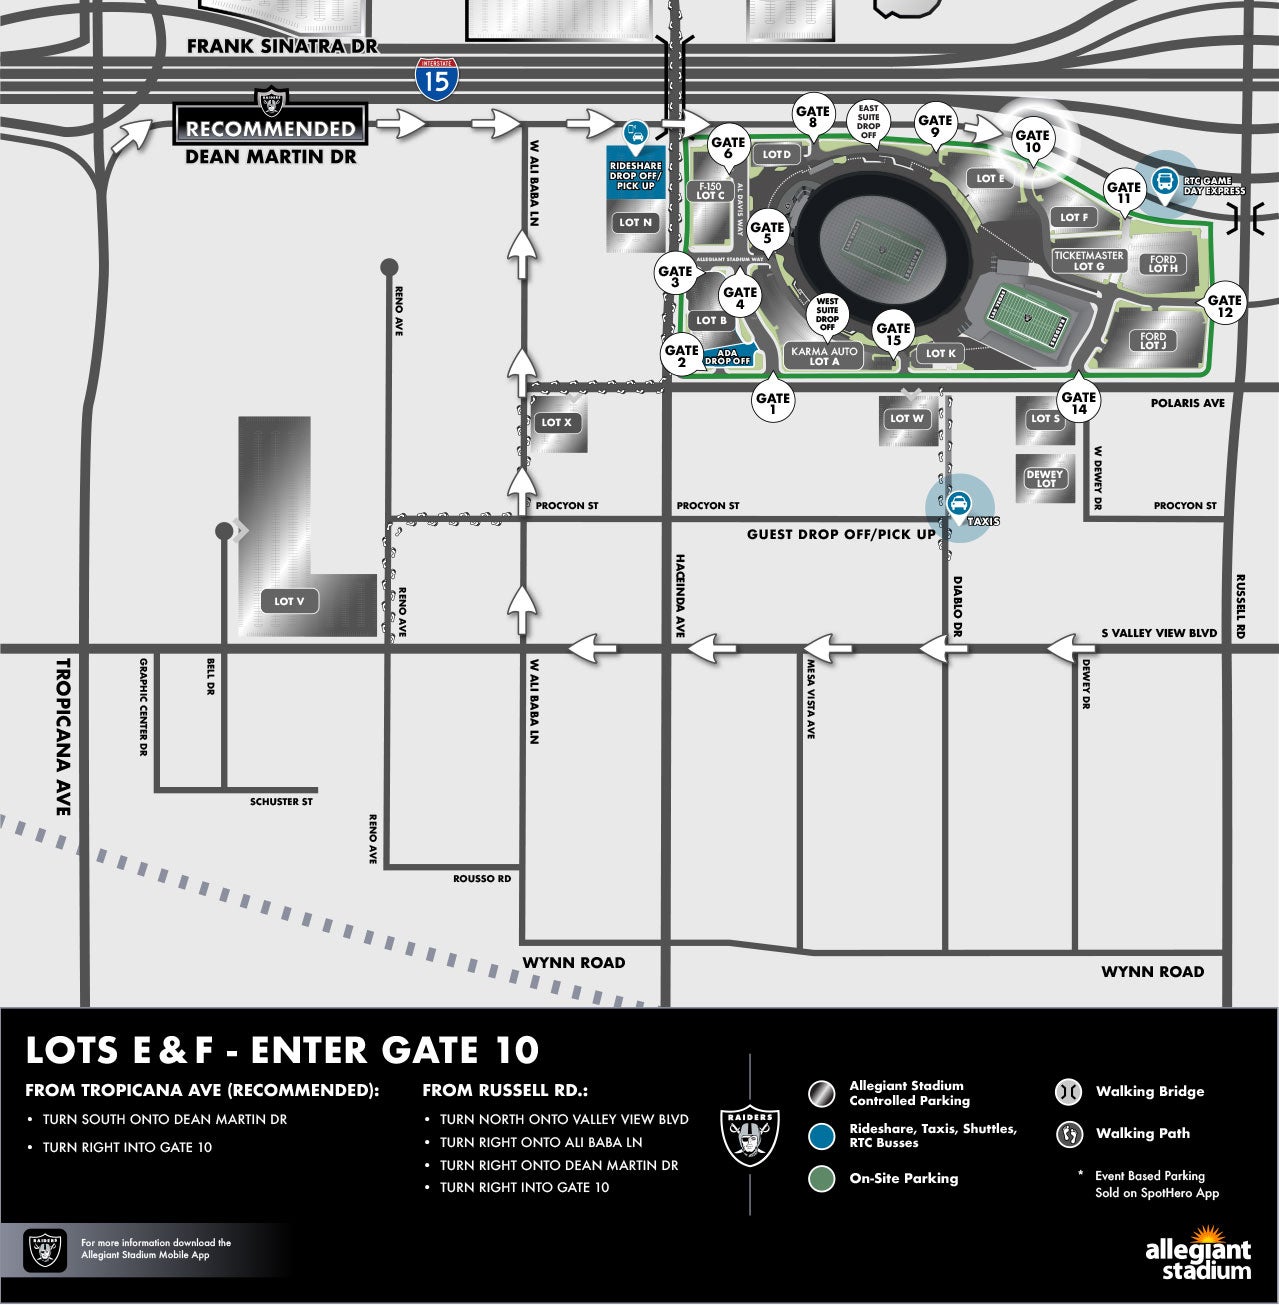 Lots E & F Parking Map - Enter Gate 10